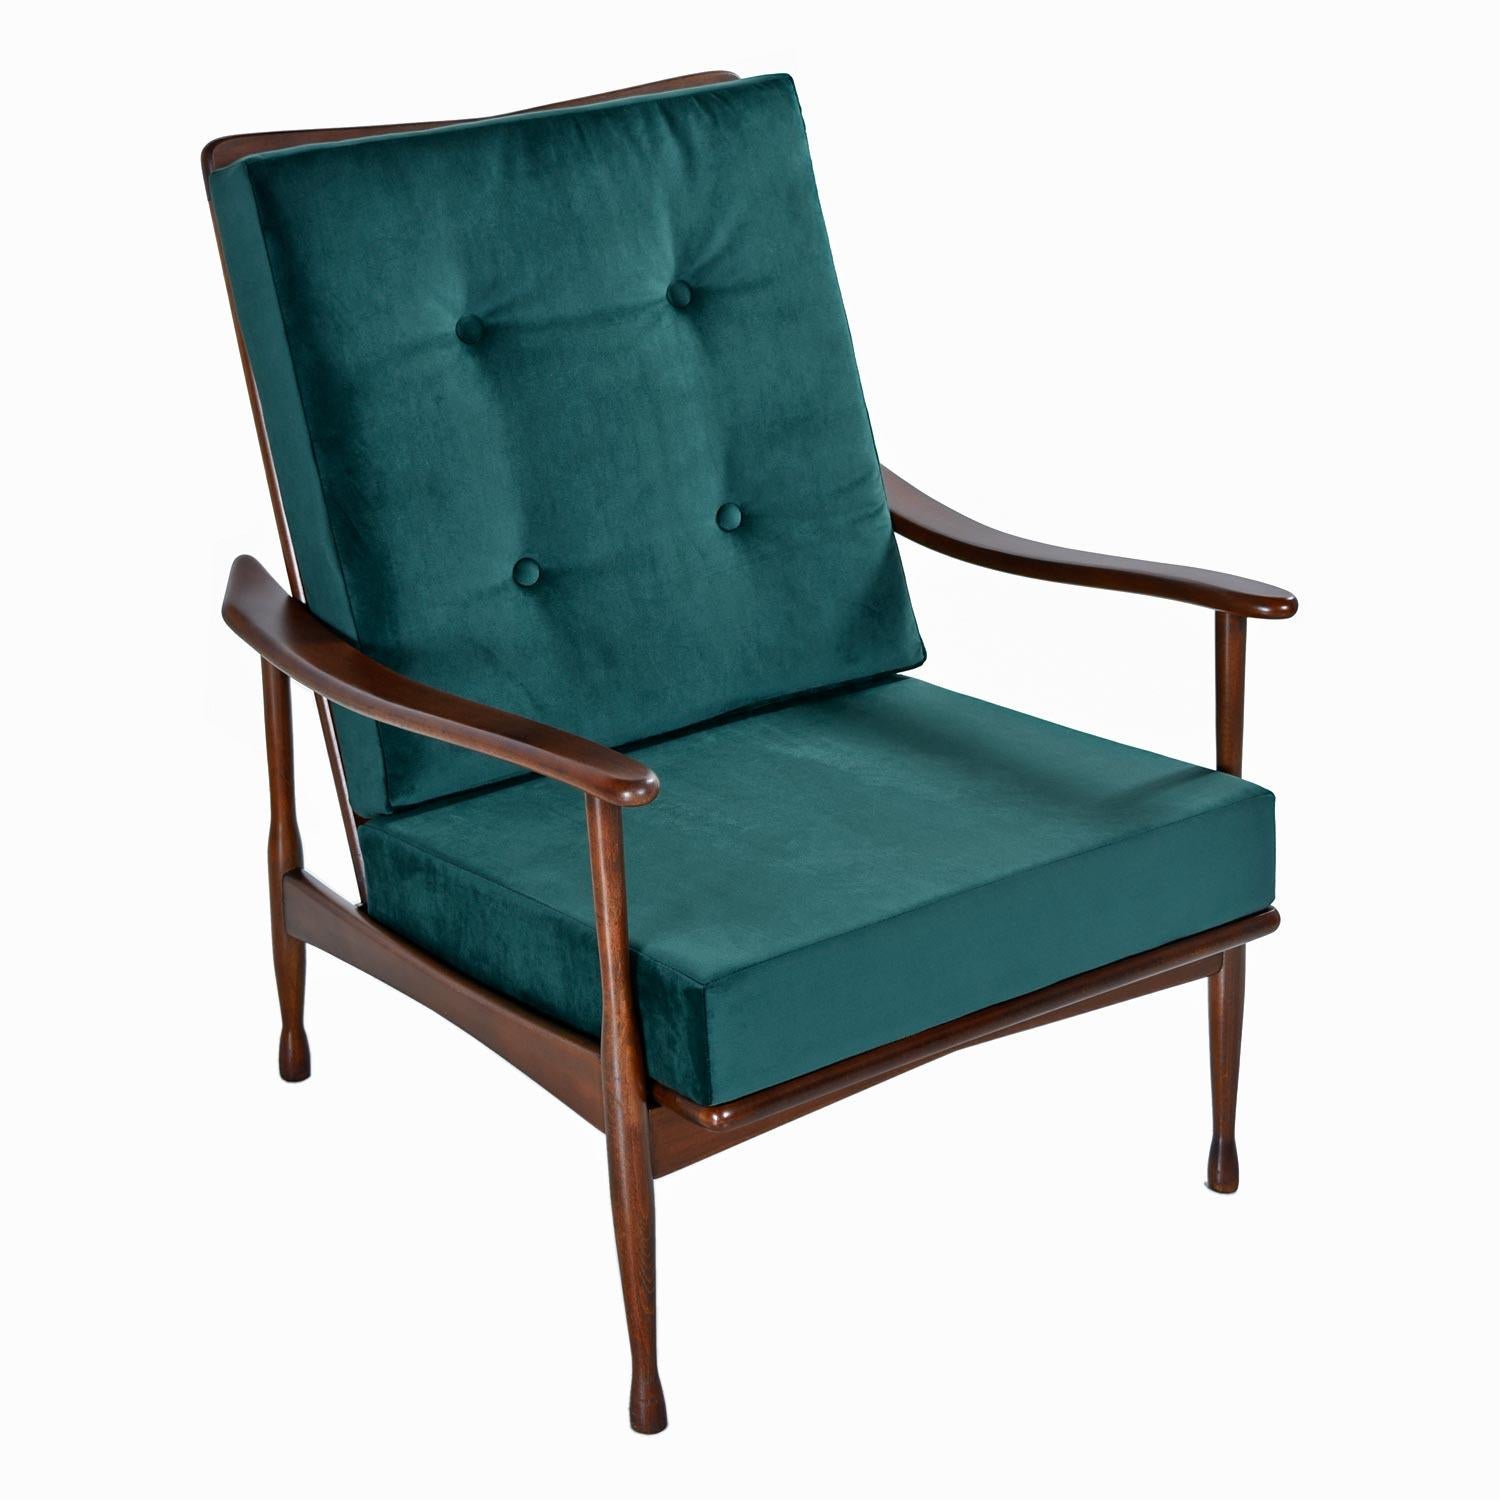 American Restored Mid-Century Modern Solid Maple Frame Lounge Chair in Green Velvet